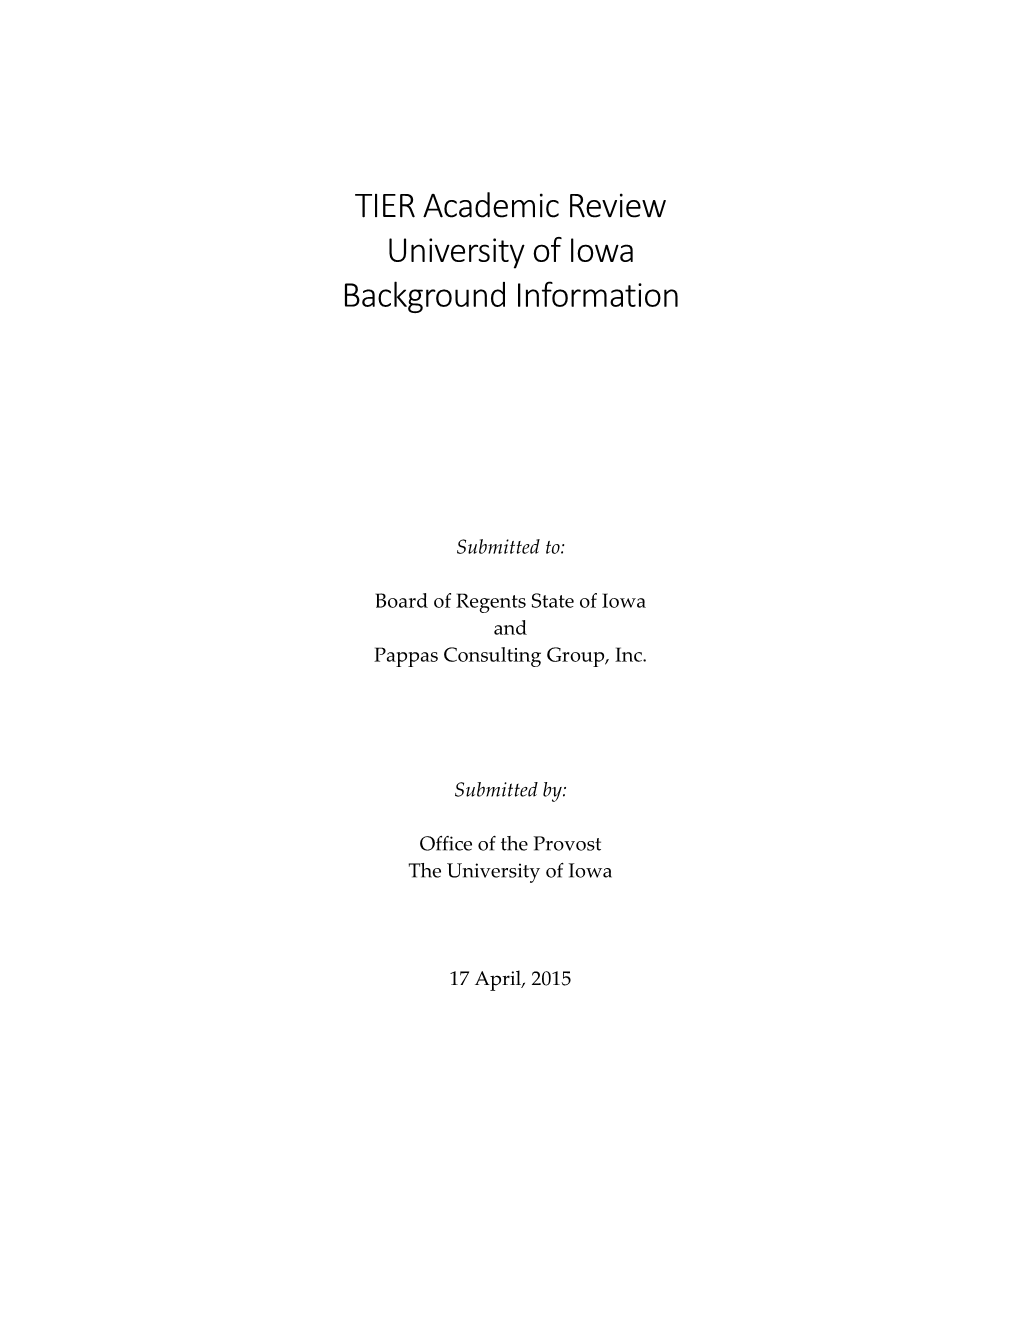 TIER Academic Review University of Iowa Background Information